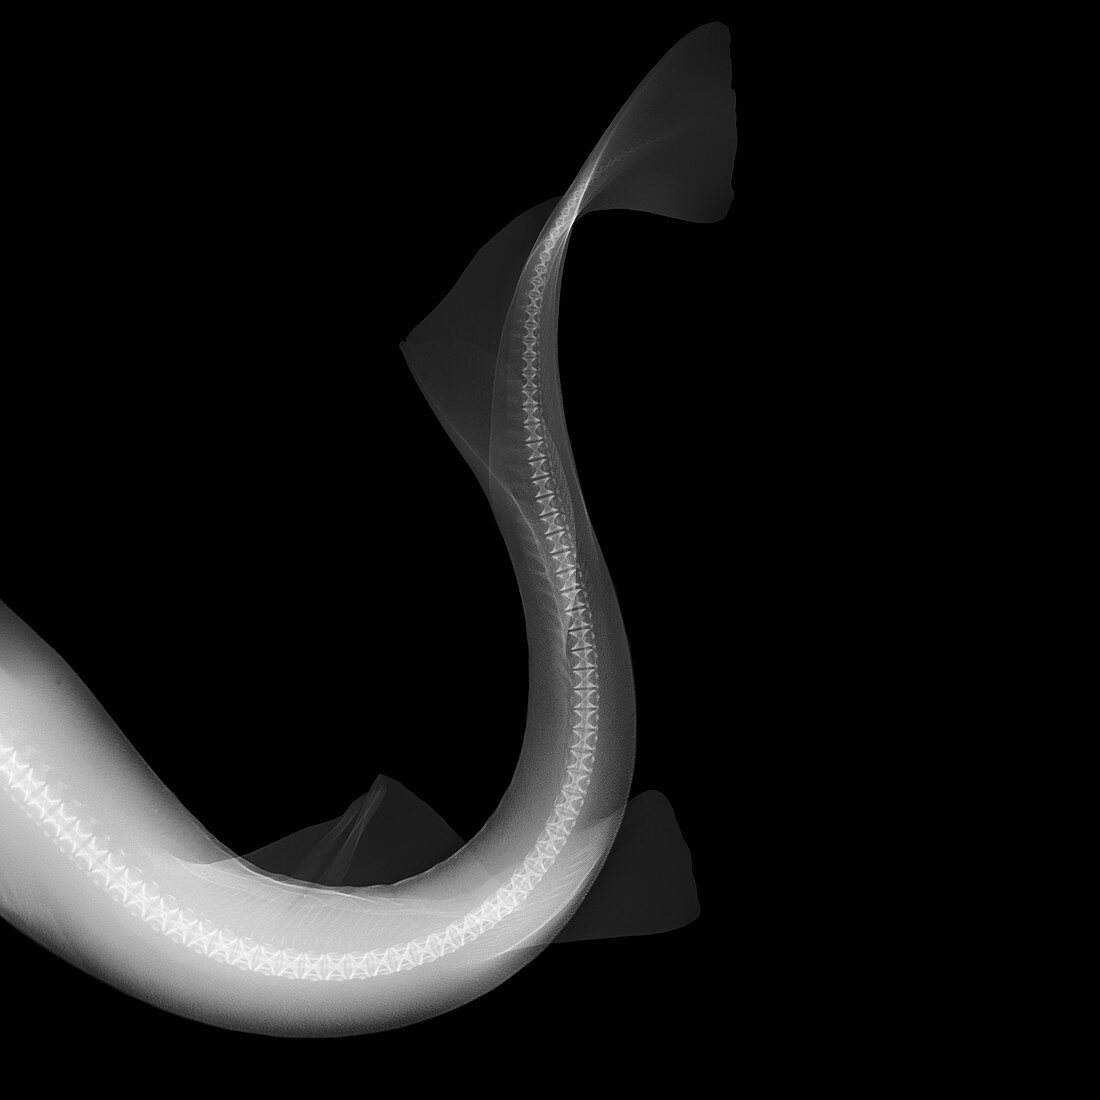 Dog fish tail, X-ray